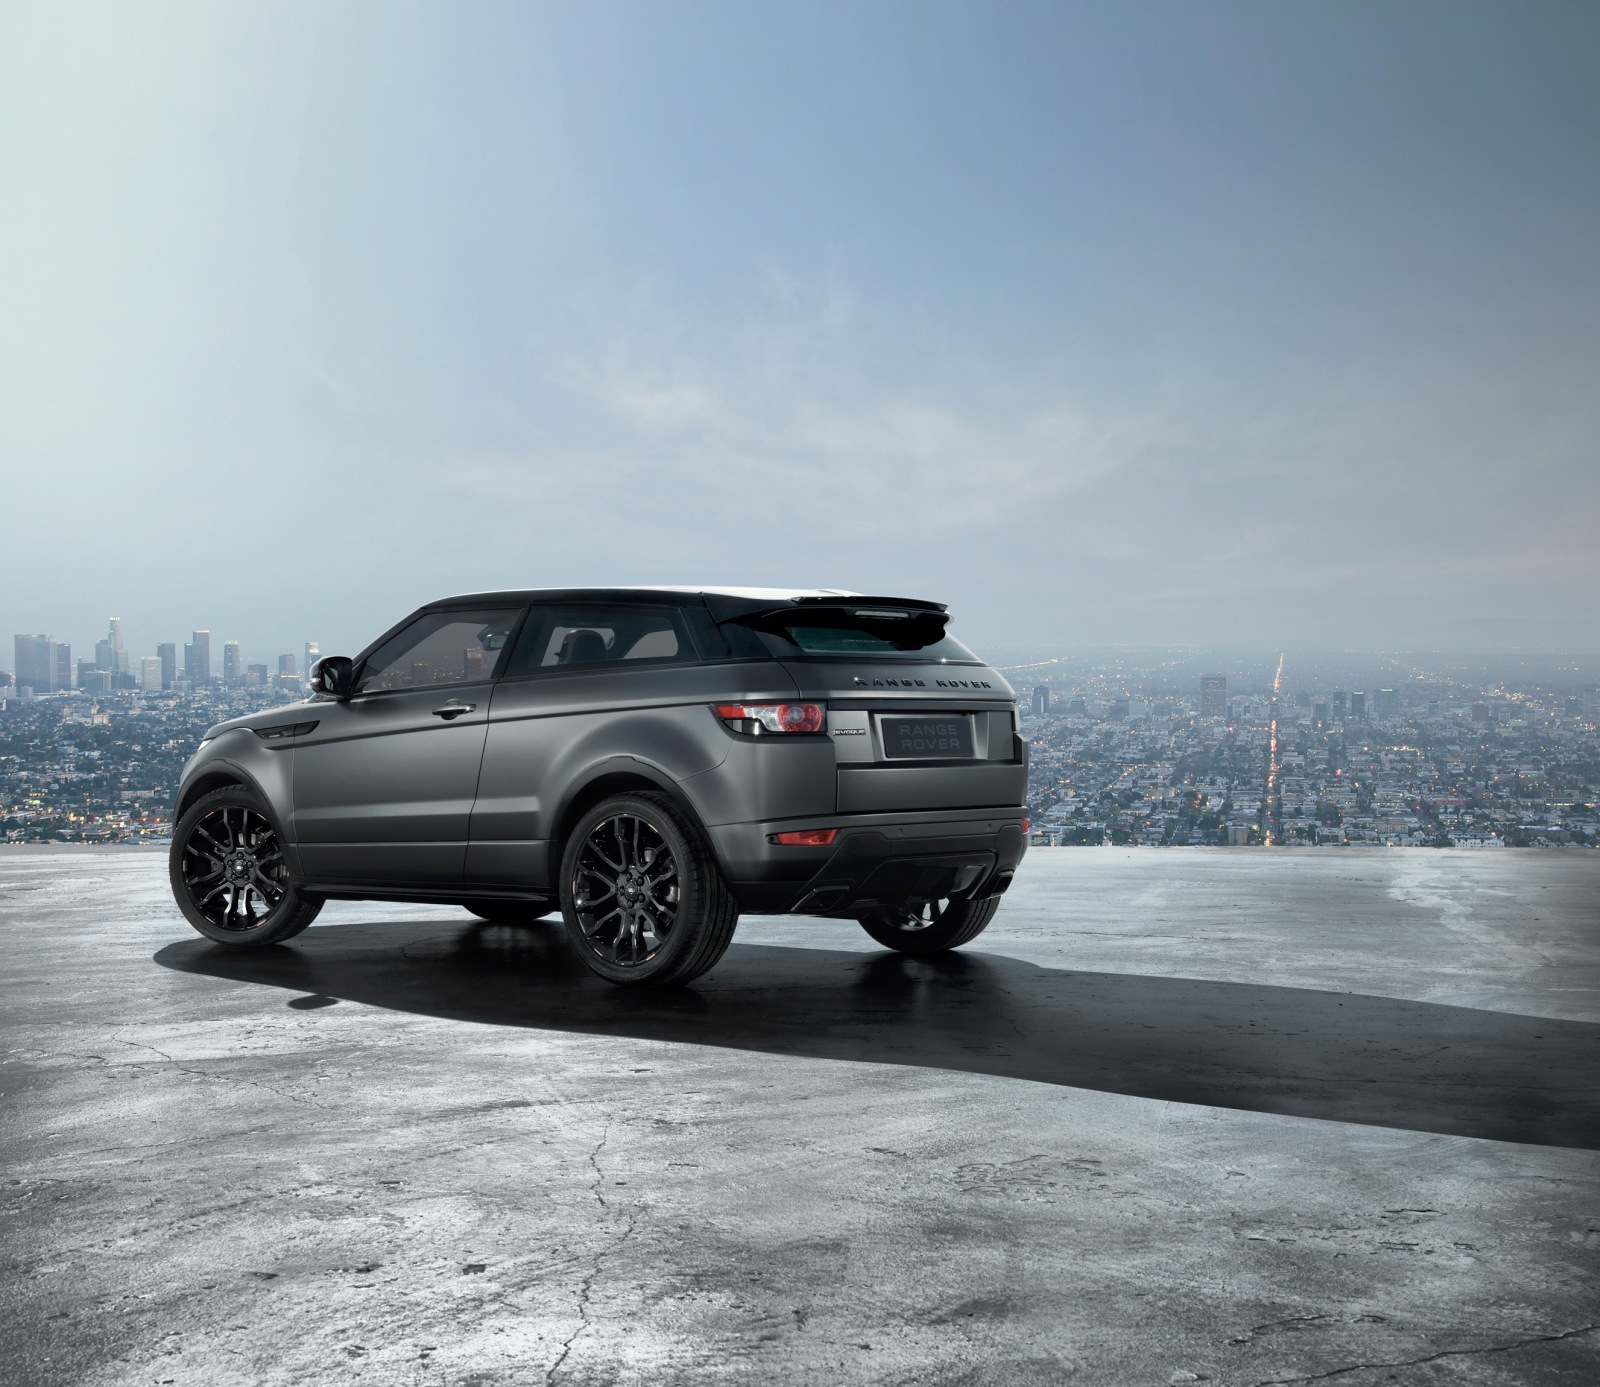 Aceasta editie speciala Range Rover Evoque se diferentiaza prin culoarea gri-mat